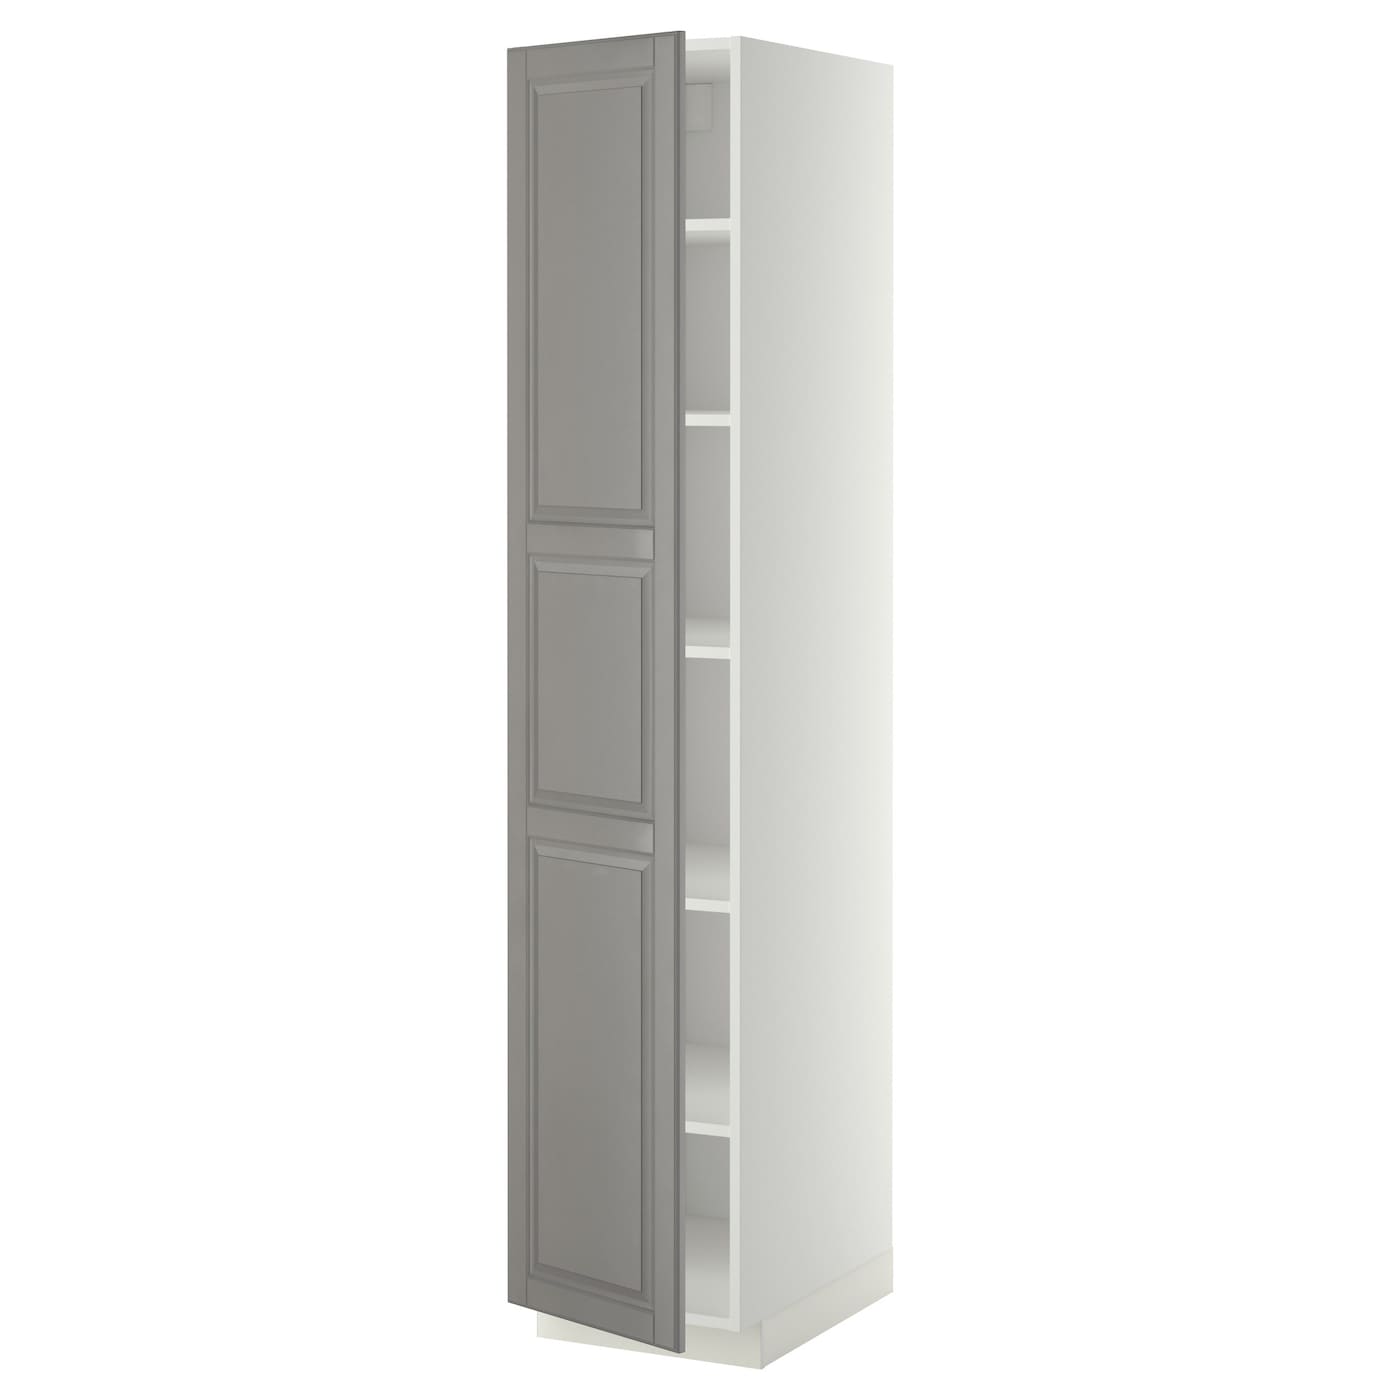 Высокий кухонный шкаф с полками - IKEA METOD/МЕТОД ИКЕА, 200х60х40 см, белый/серый